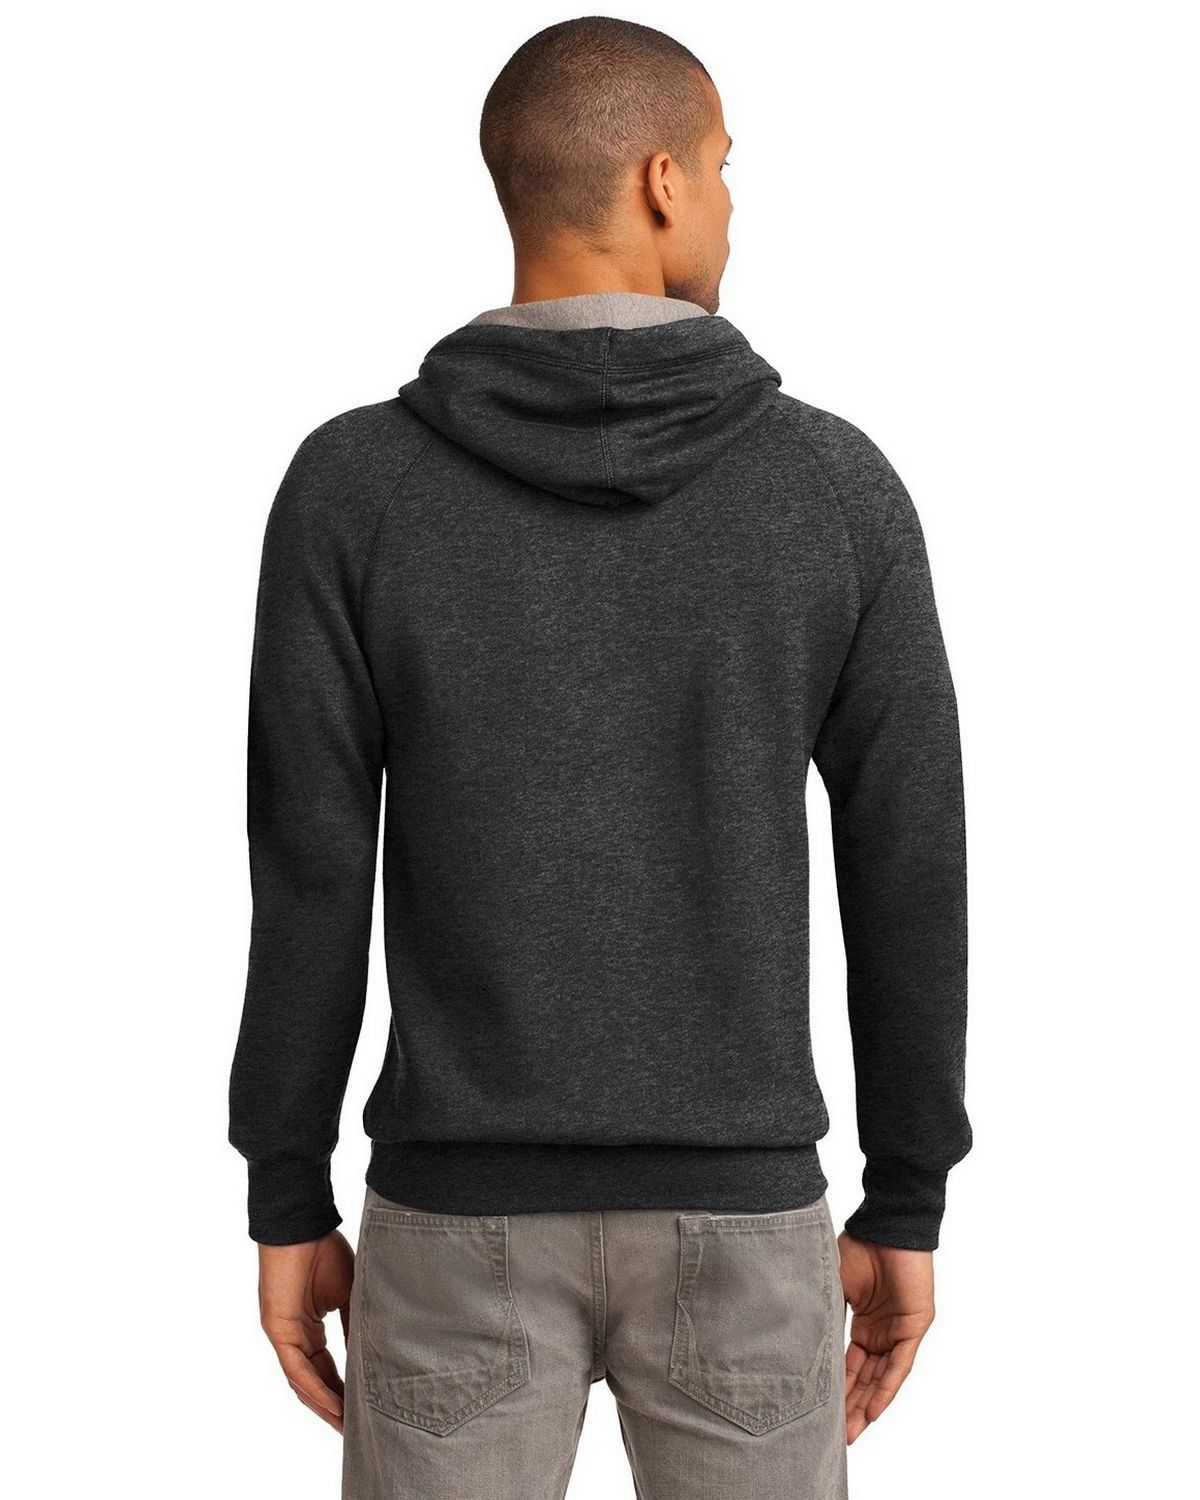 Buy Hanes HN270 Nano Pullover Hooded Sweatshirt